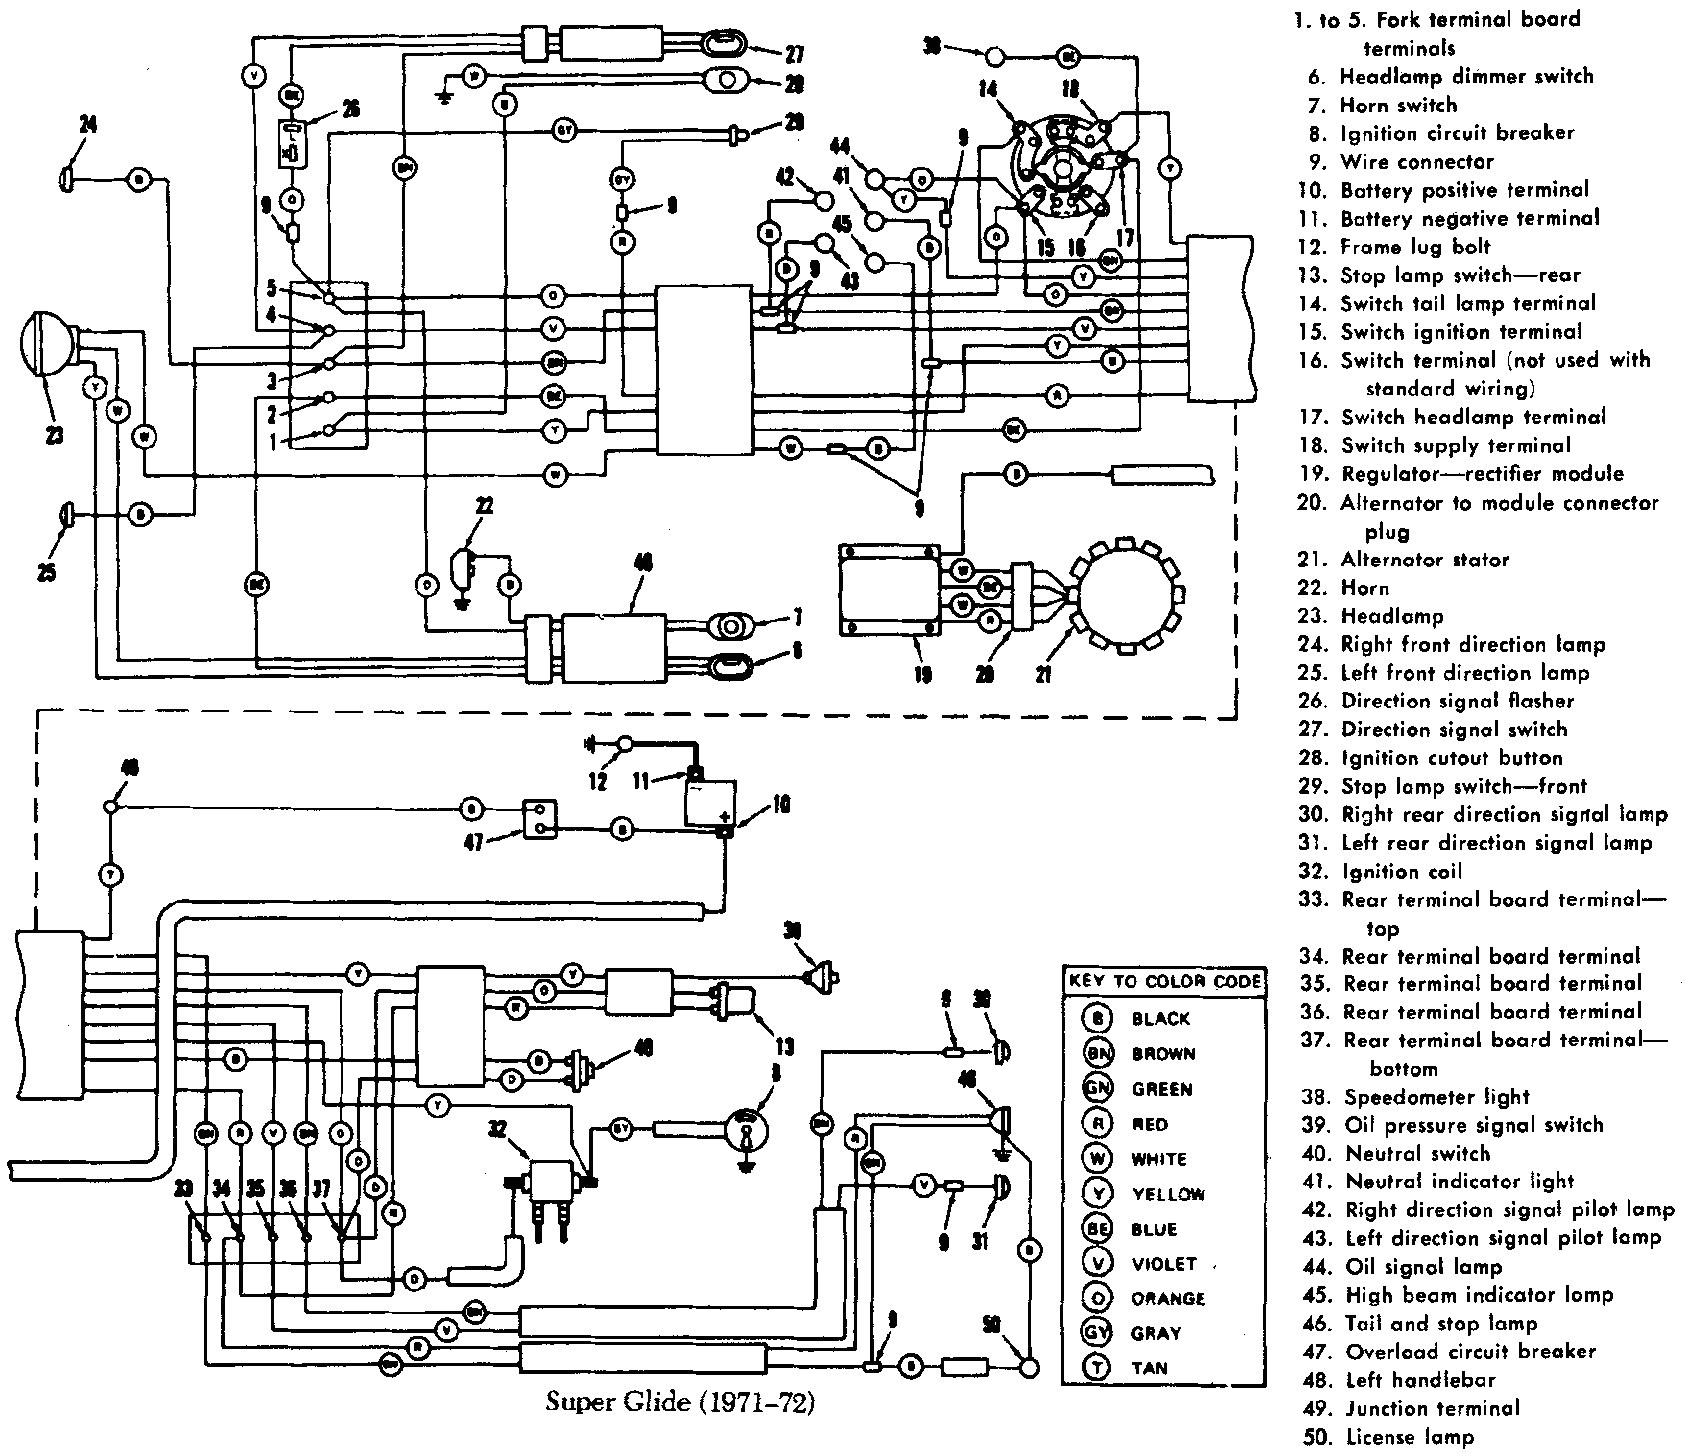 basic harley wiring diagram wiring diagram databaseultra choppers wiring diagrams harley flh wiring harness diagram